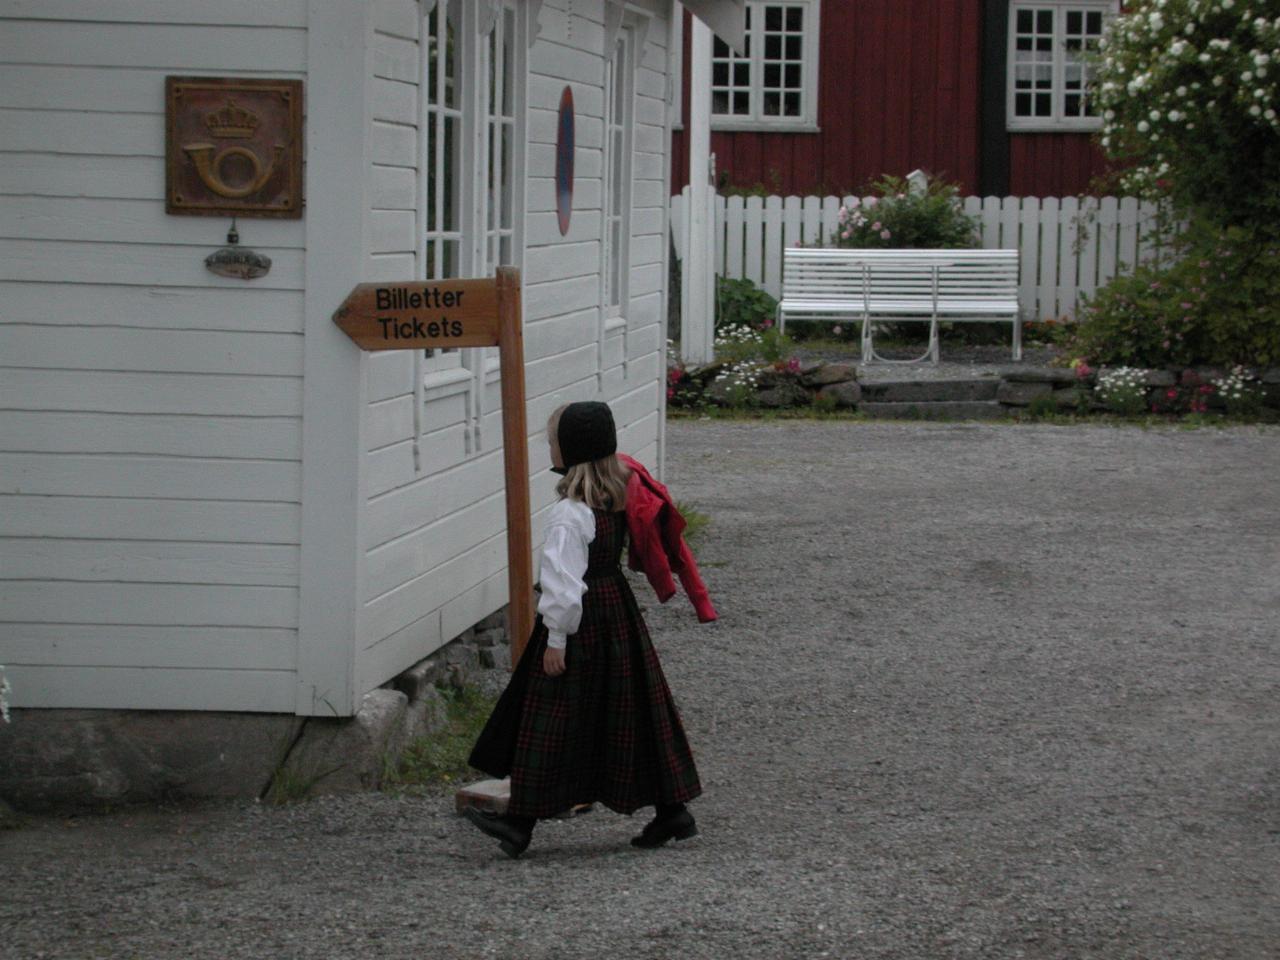 KPLU Viking Jazz: One of the dancers arriving at the Romsdalmuseet (Romsdal Museum)